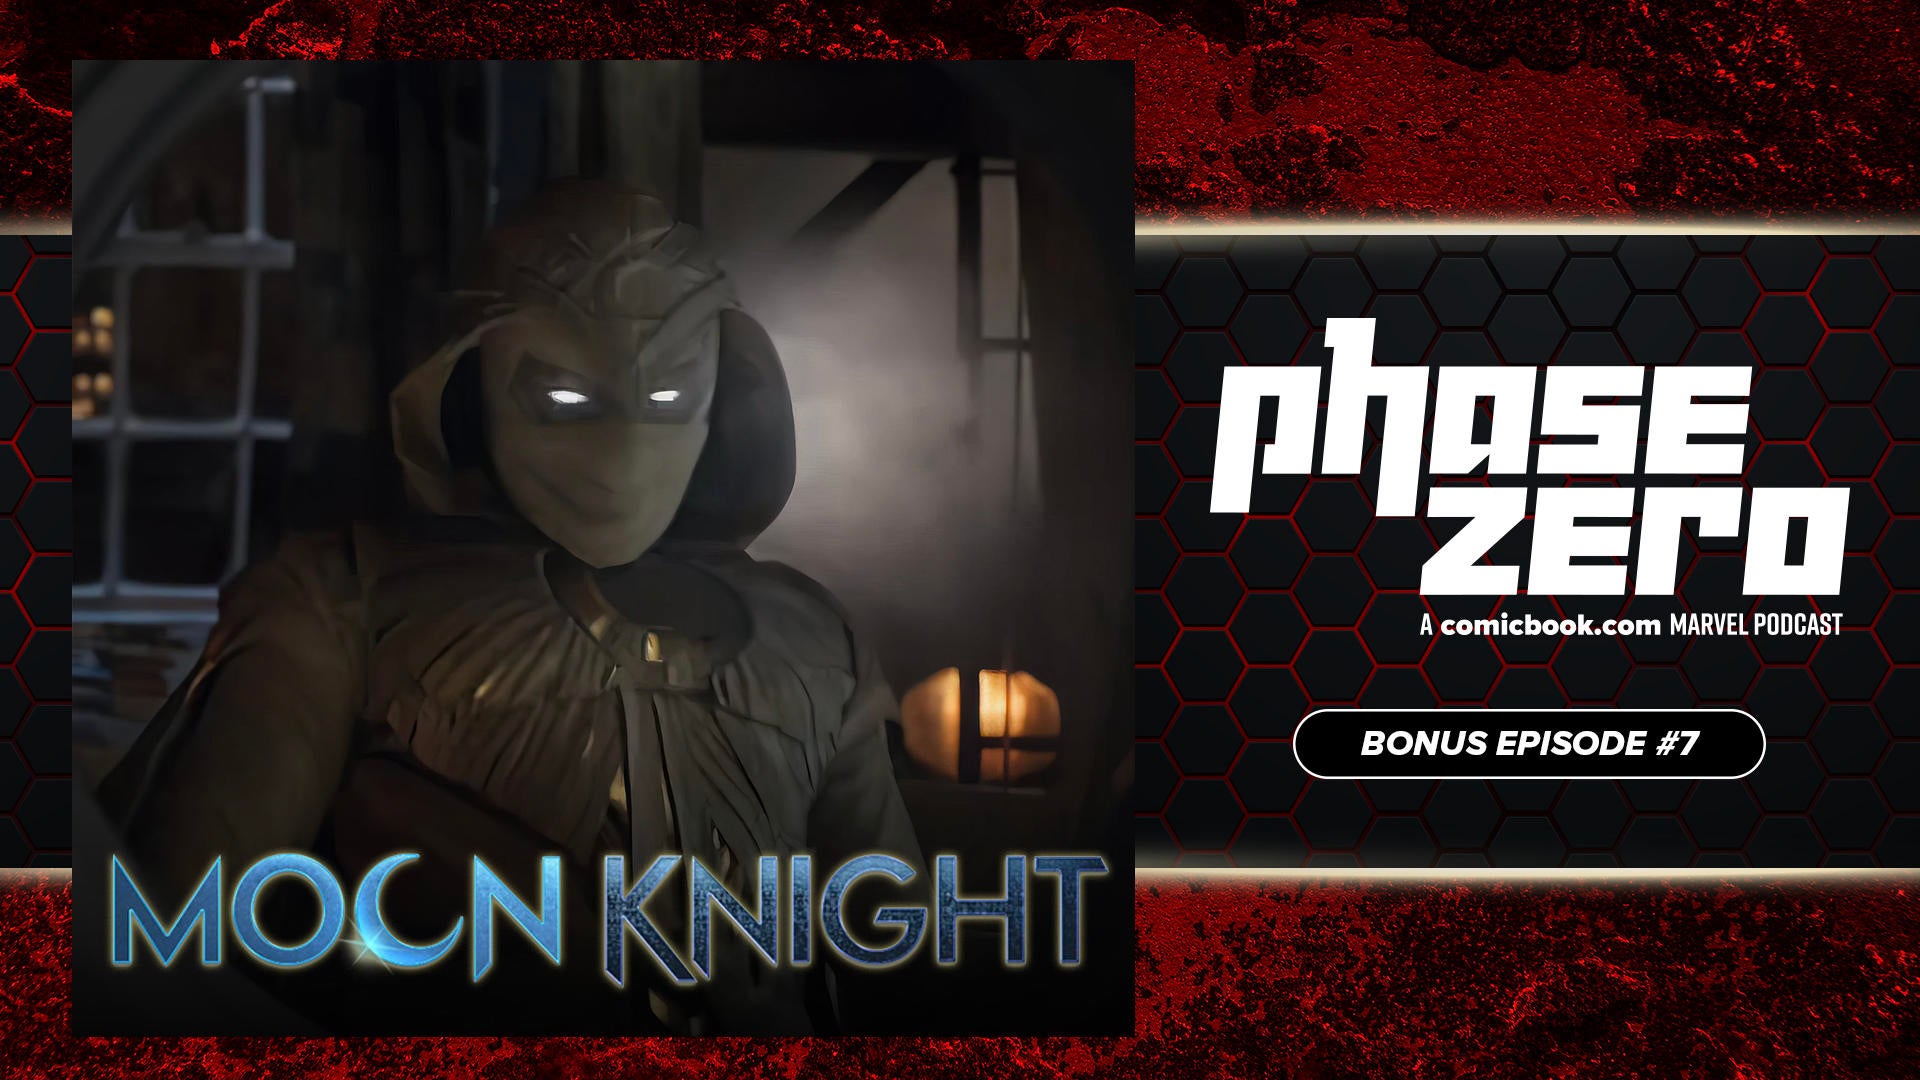 Moon Knight Trailer Breakdown, Series Guide Bonus Episode available now